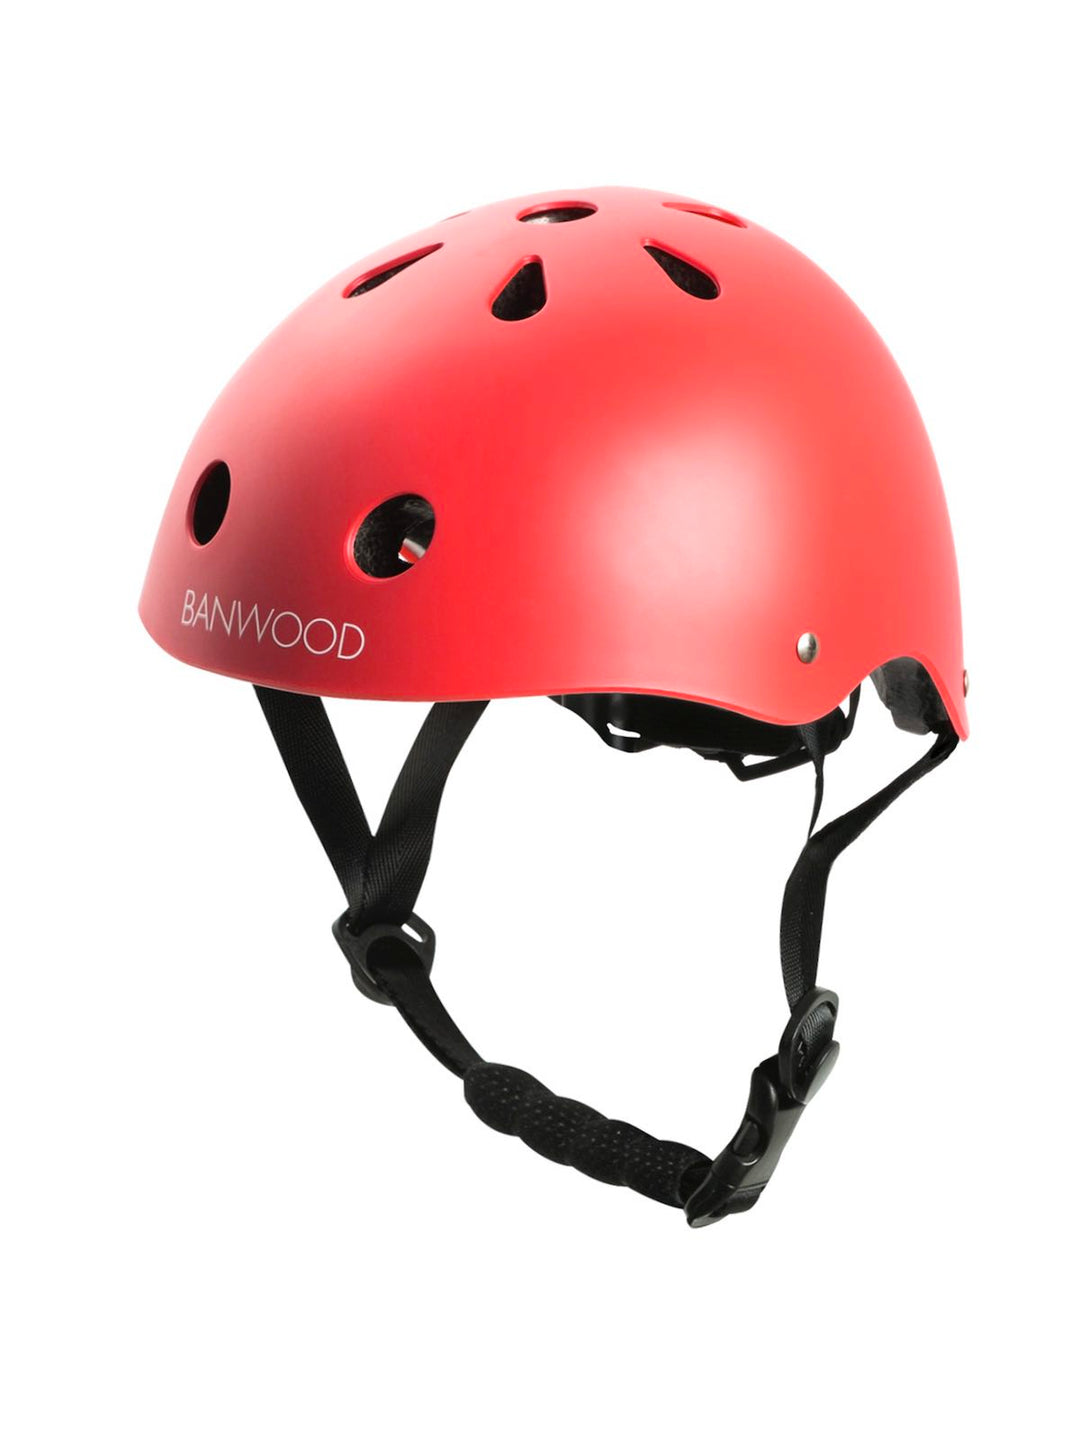 Banwood Classic Helmet in Red